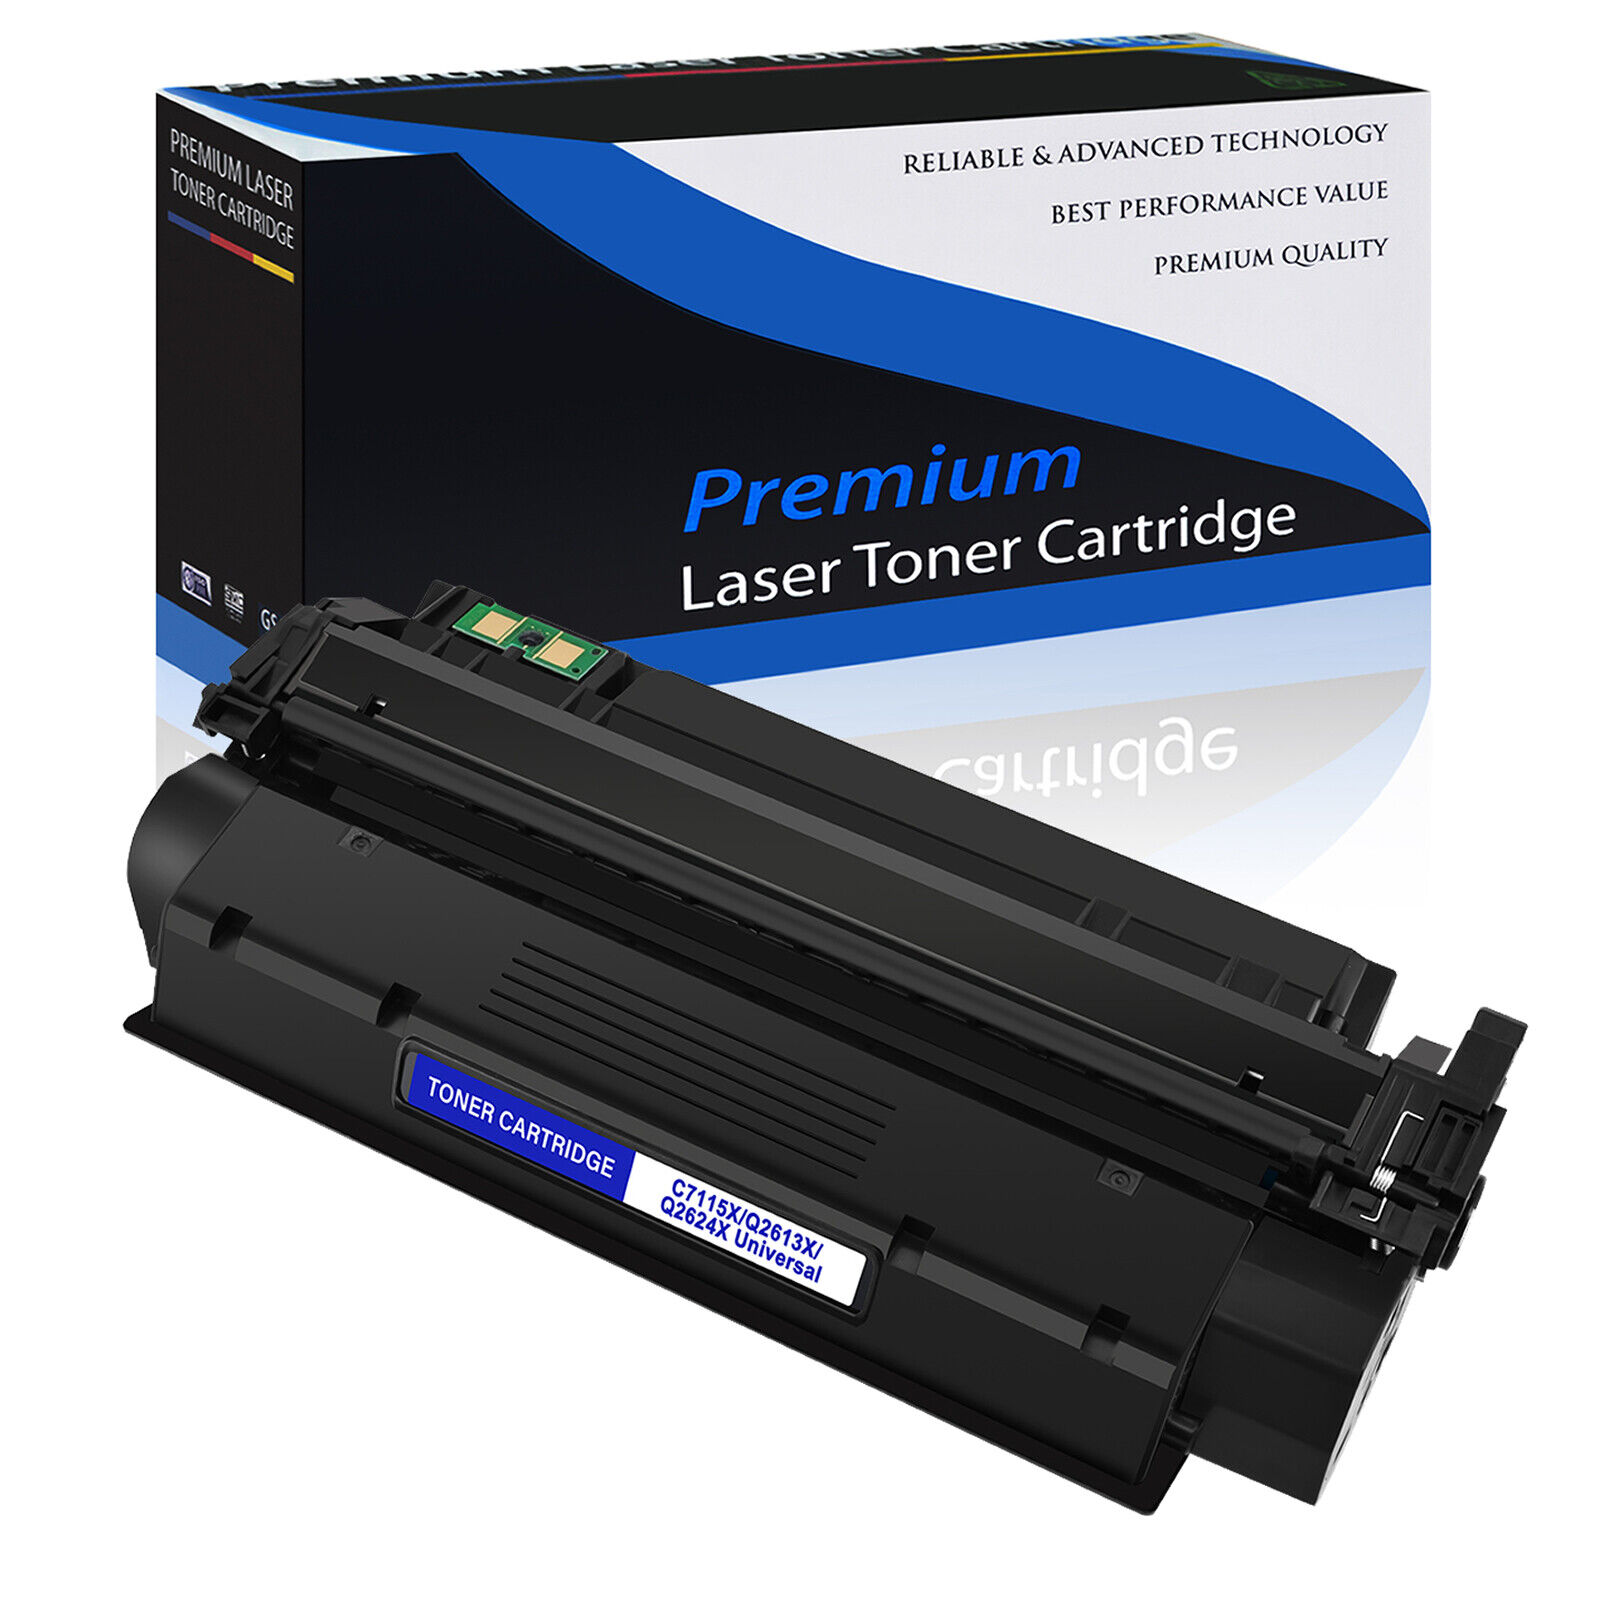 High Yield Toner Cartridge Black For Hp C7115X 15X LaserJet 1200 Series Printer